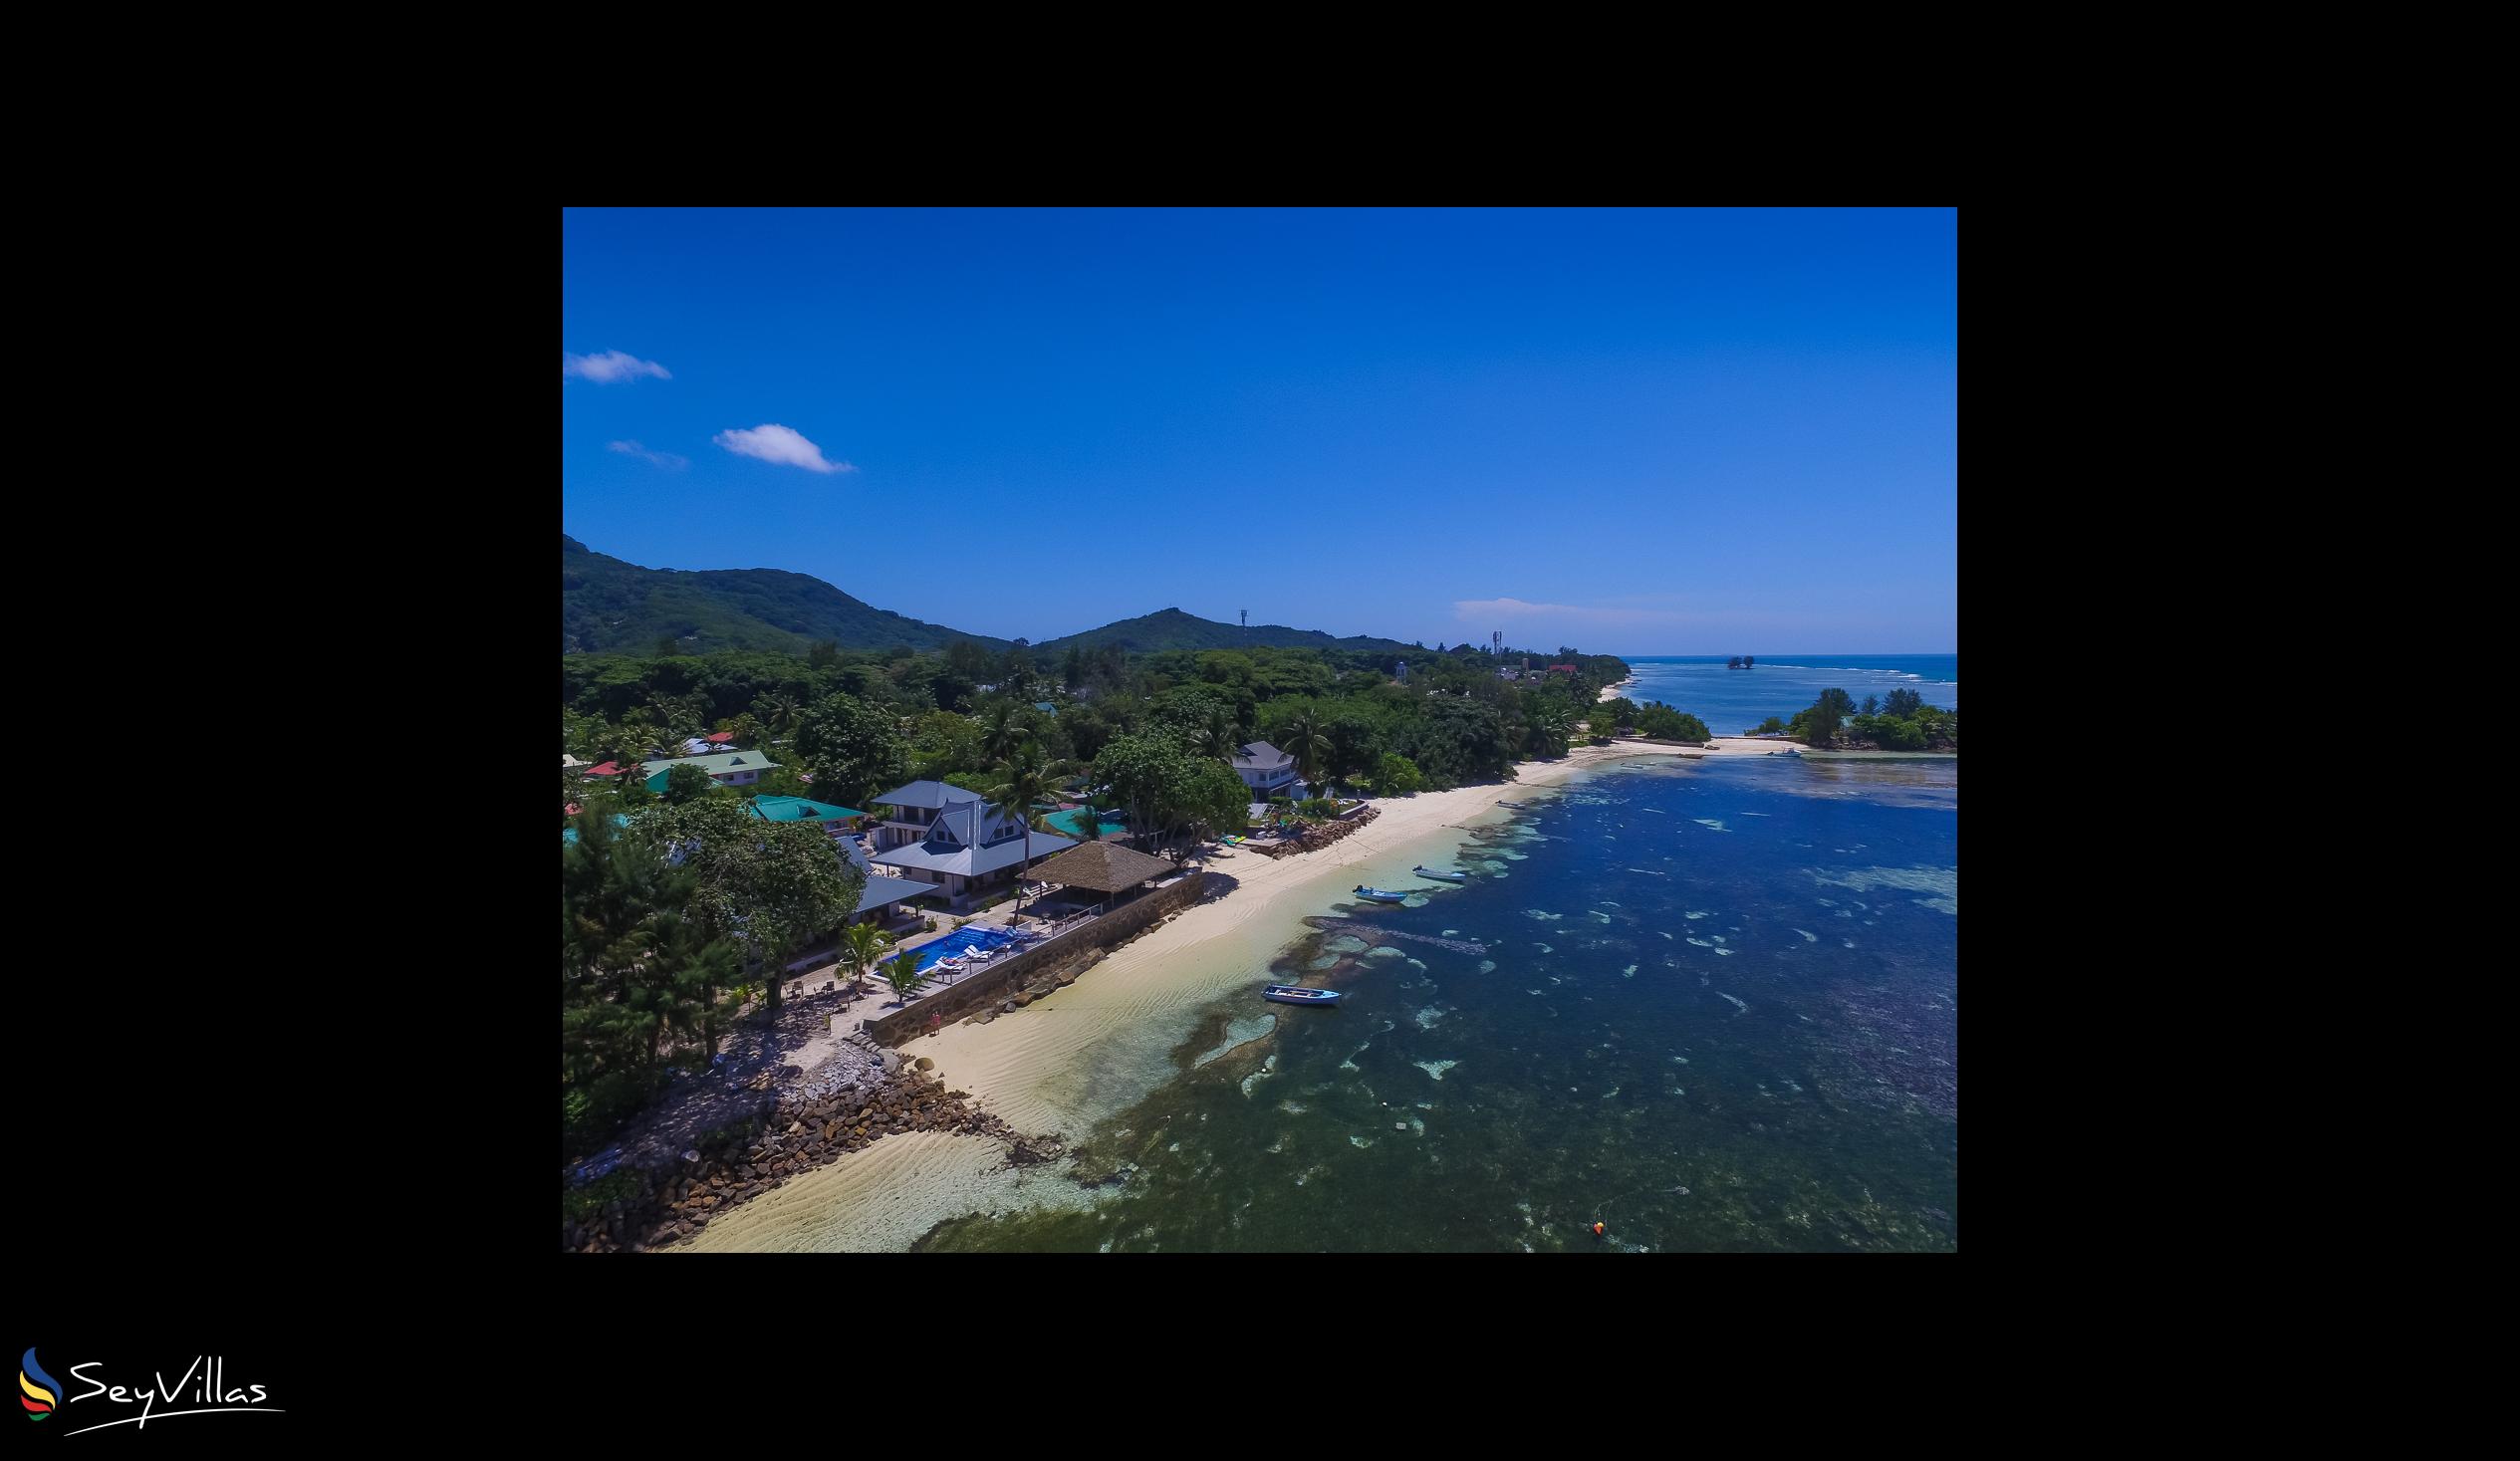 Foto 78: Le Nautique Luxury Waterfront Hotel - Posizione - La Digue (Seychelles)